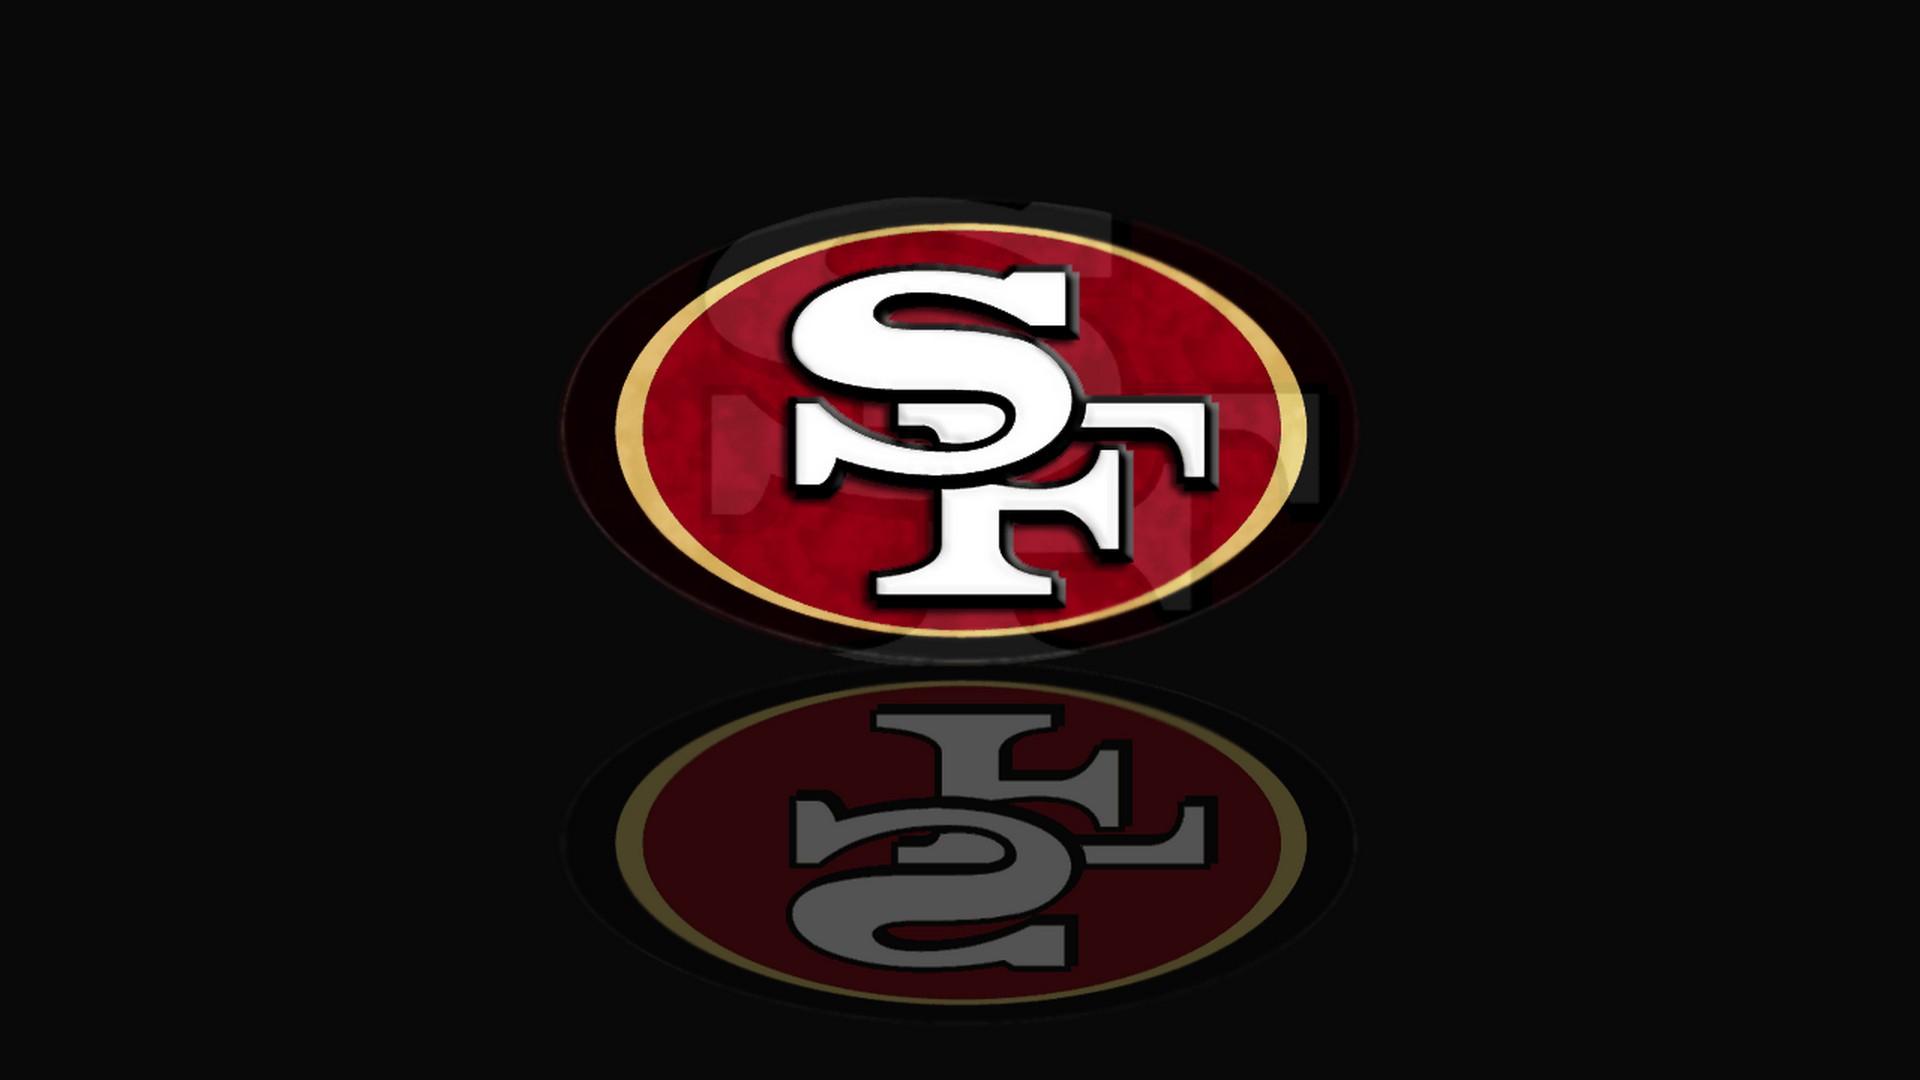 Free download Wallpaper HD San Francisco 49ers 2019 NFL